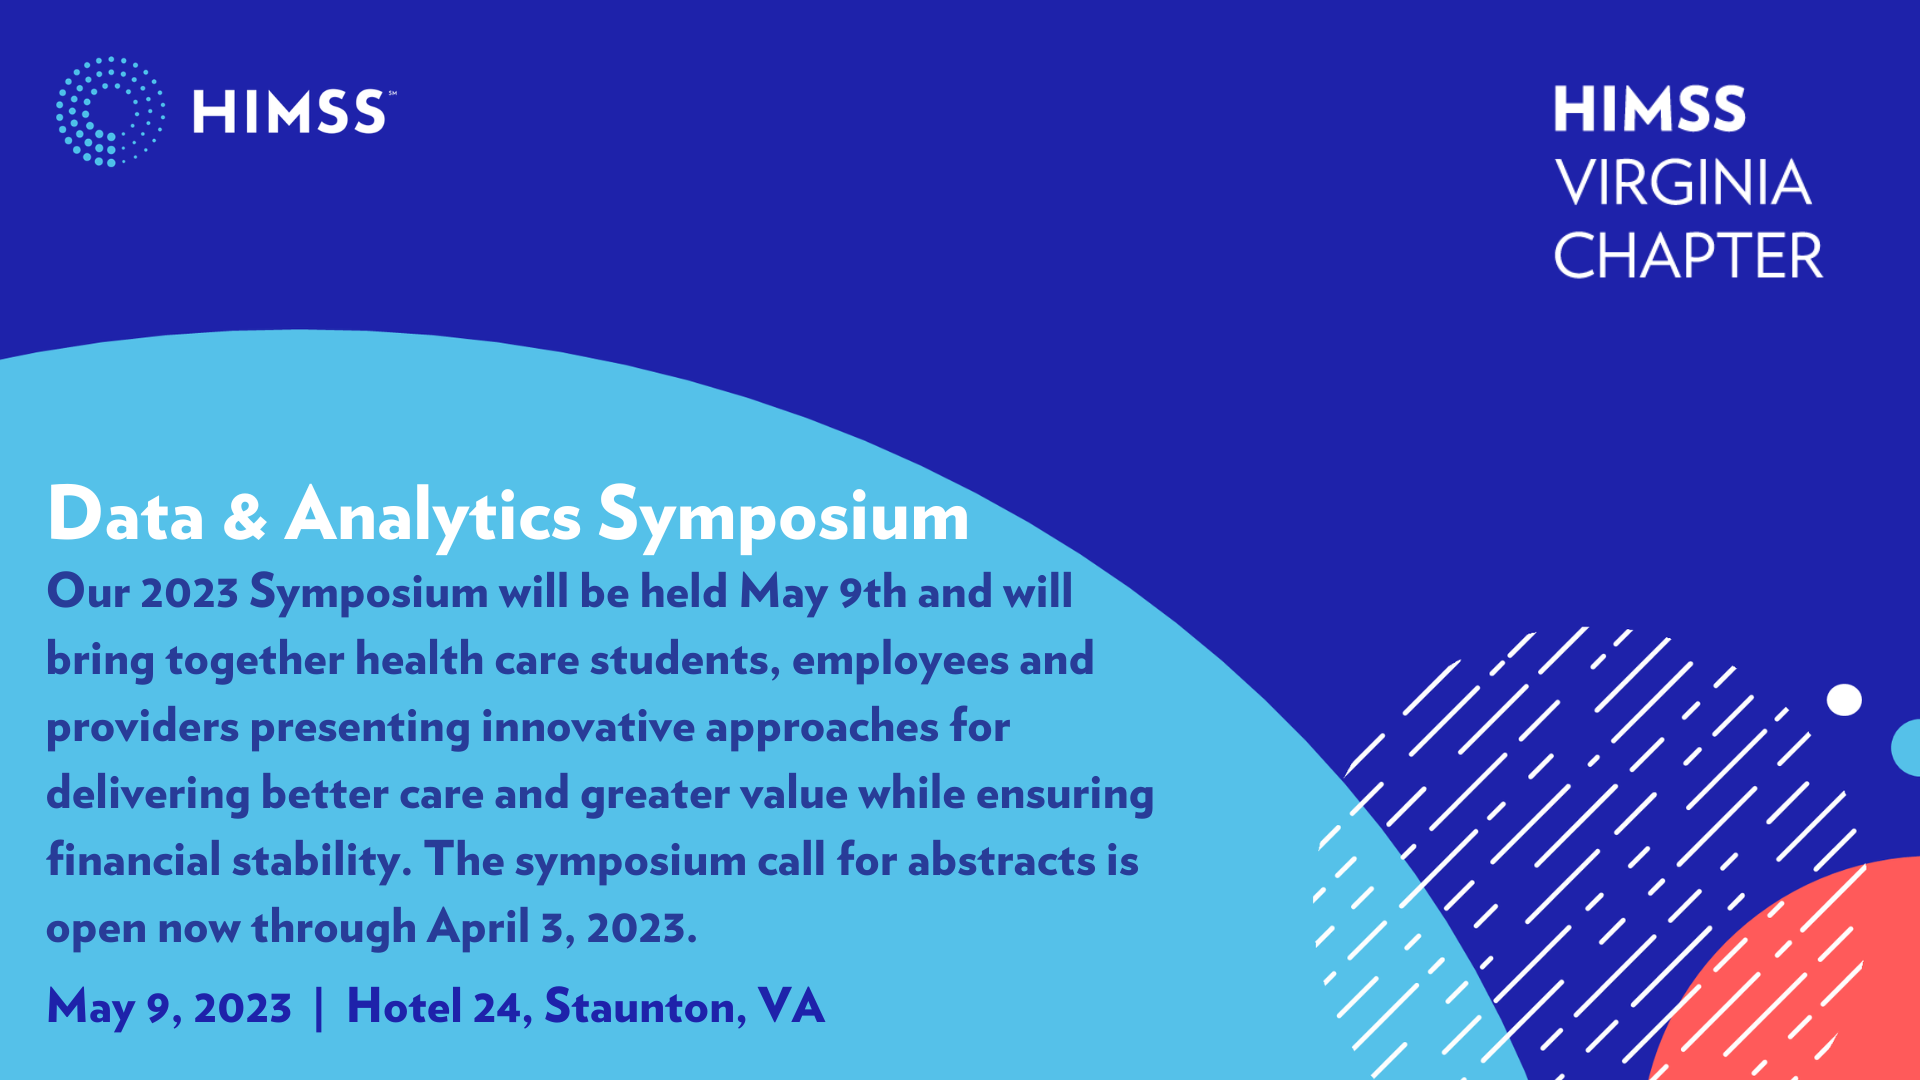 Virginia HIMSS Data & Analytics Symposium 2023